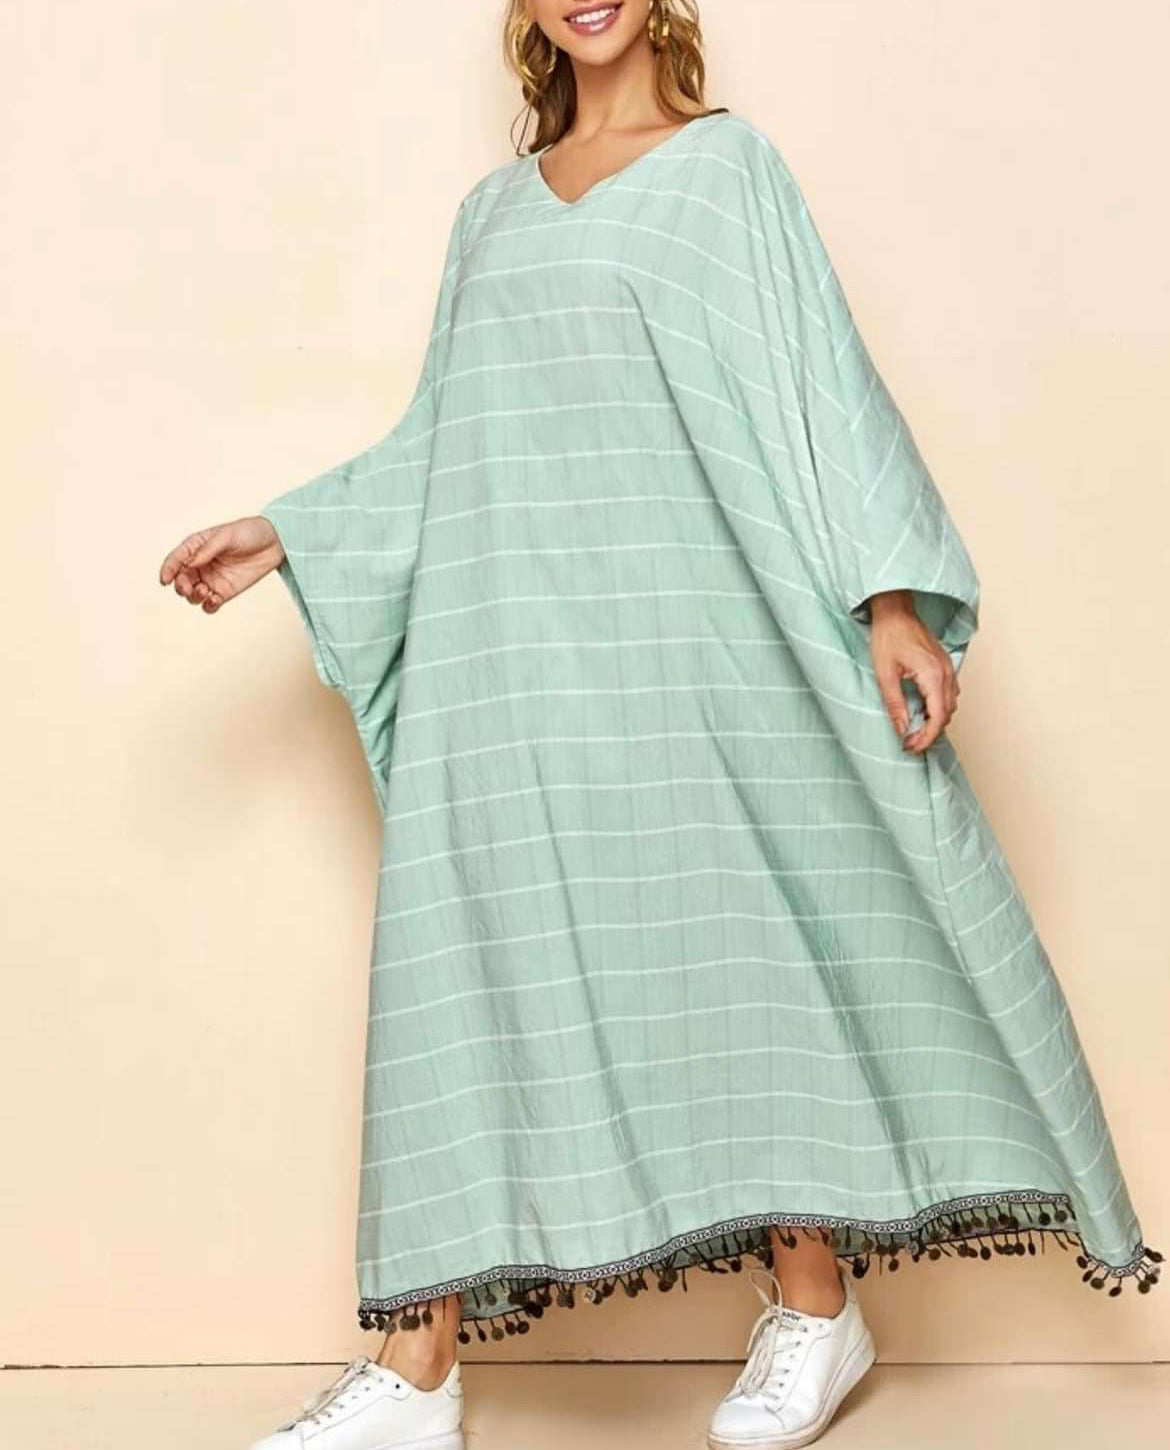 Arabian Dress